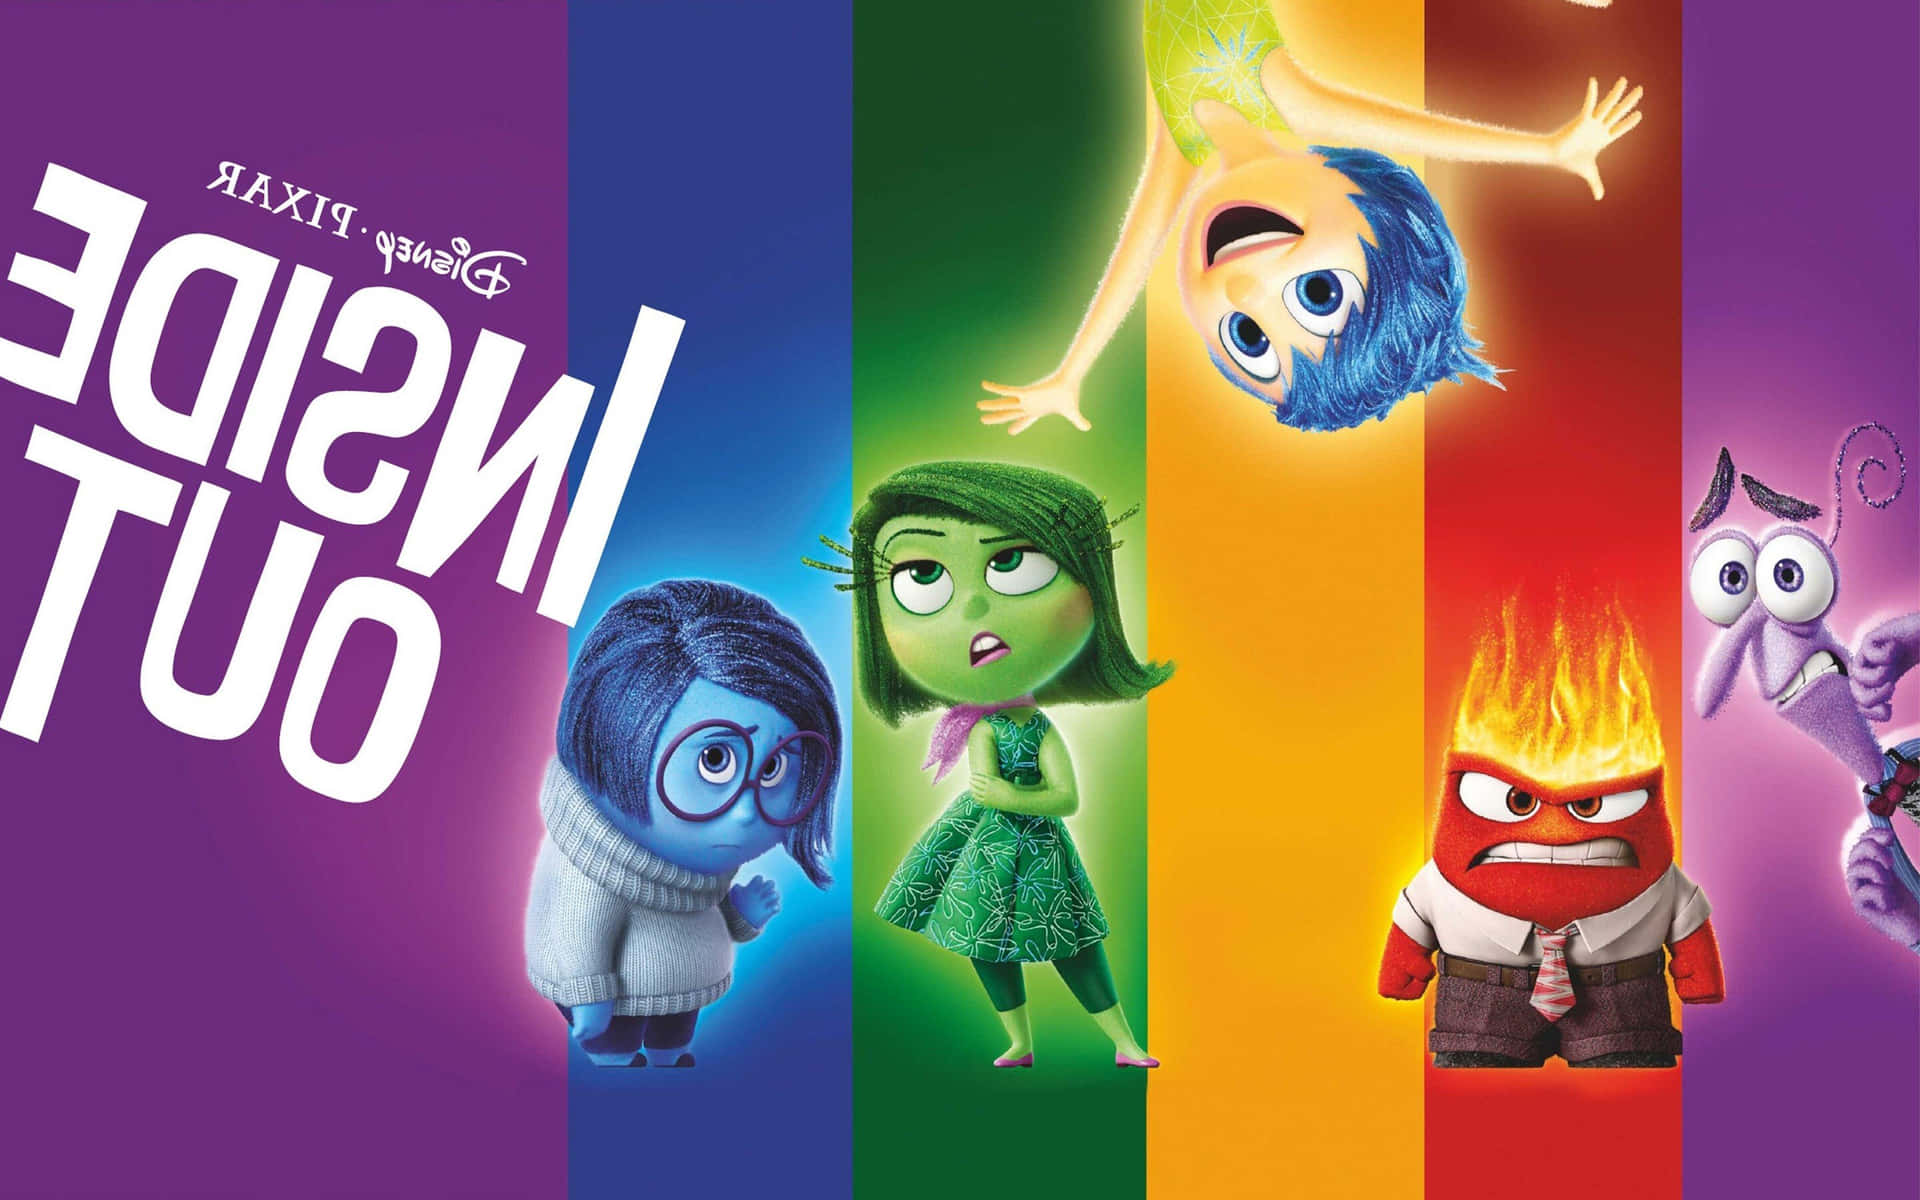 The Emotional Cast of Disney Pixar's Inside Out